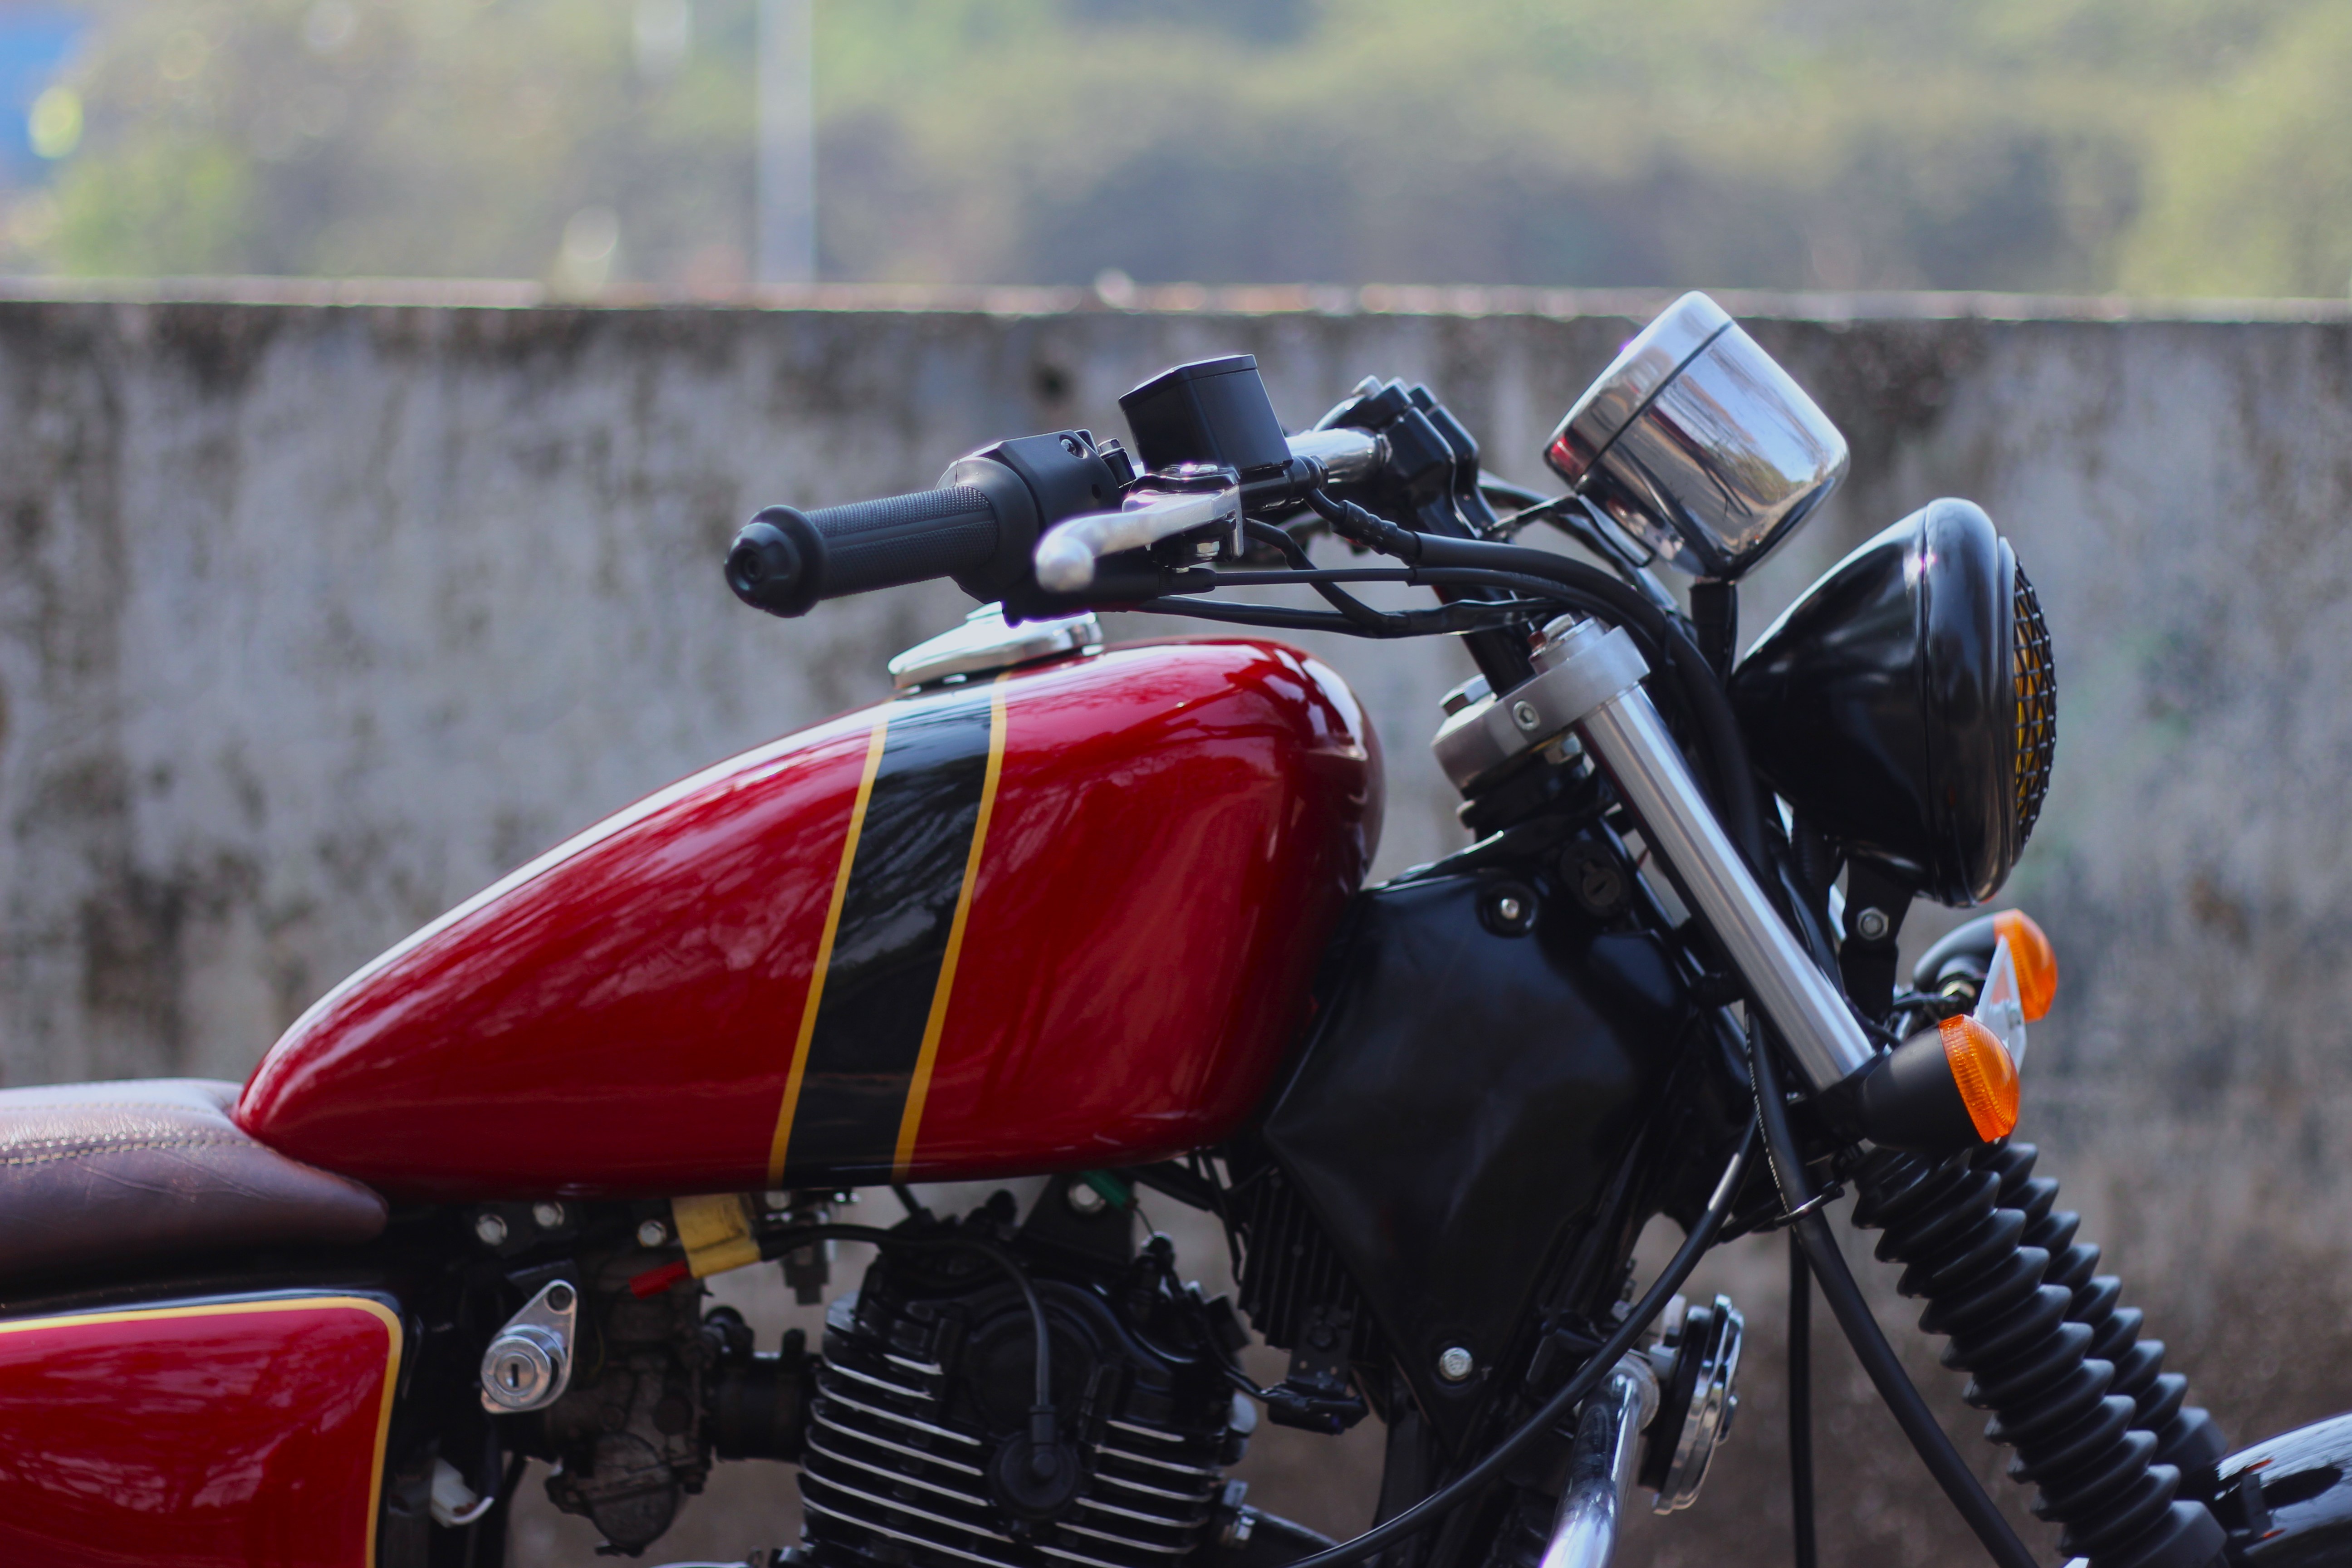 Meet Perfectly-Modified Bajaj Avenger Cruiser Motorcycle by JEDI Customs - back